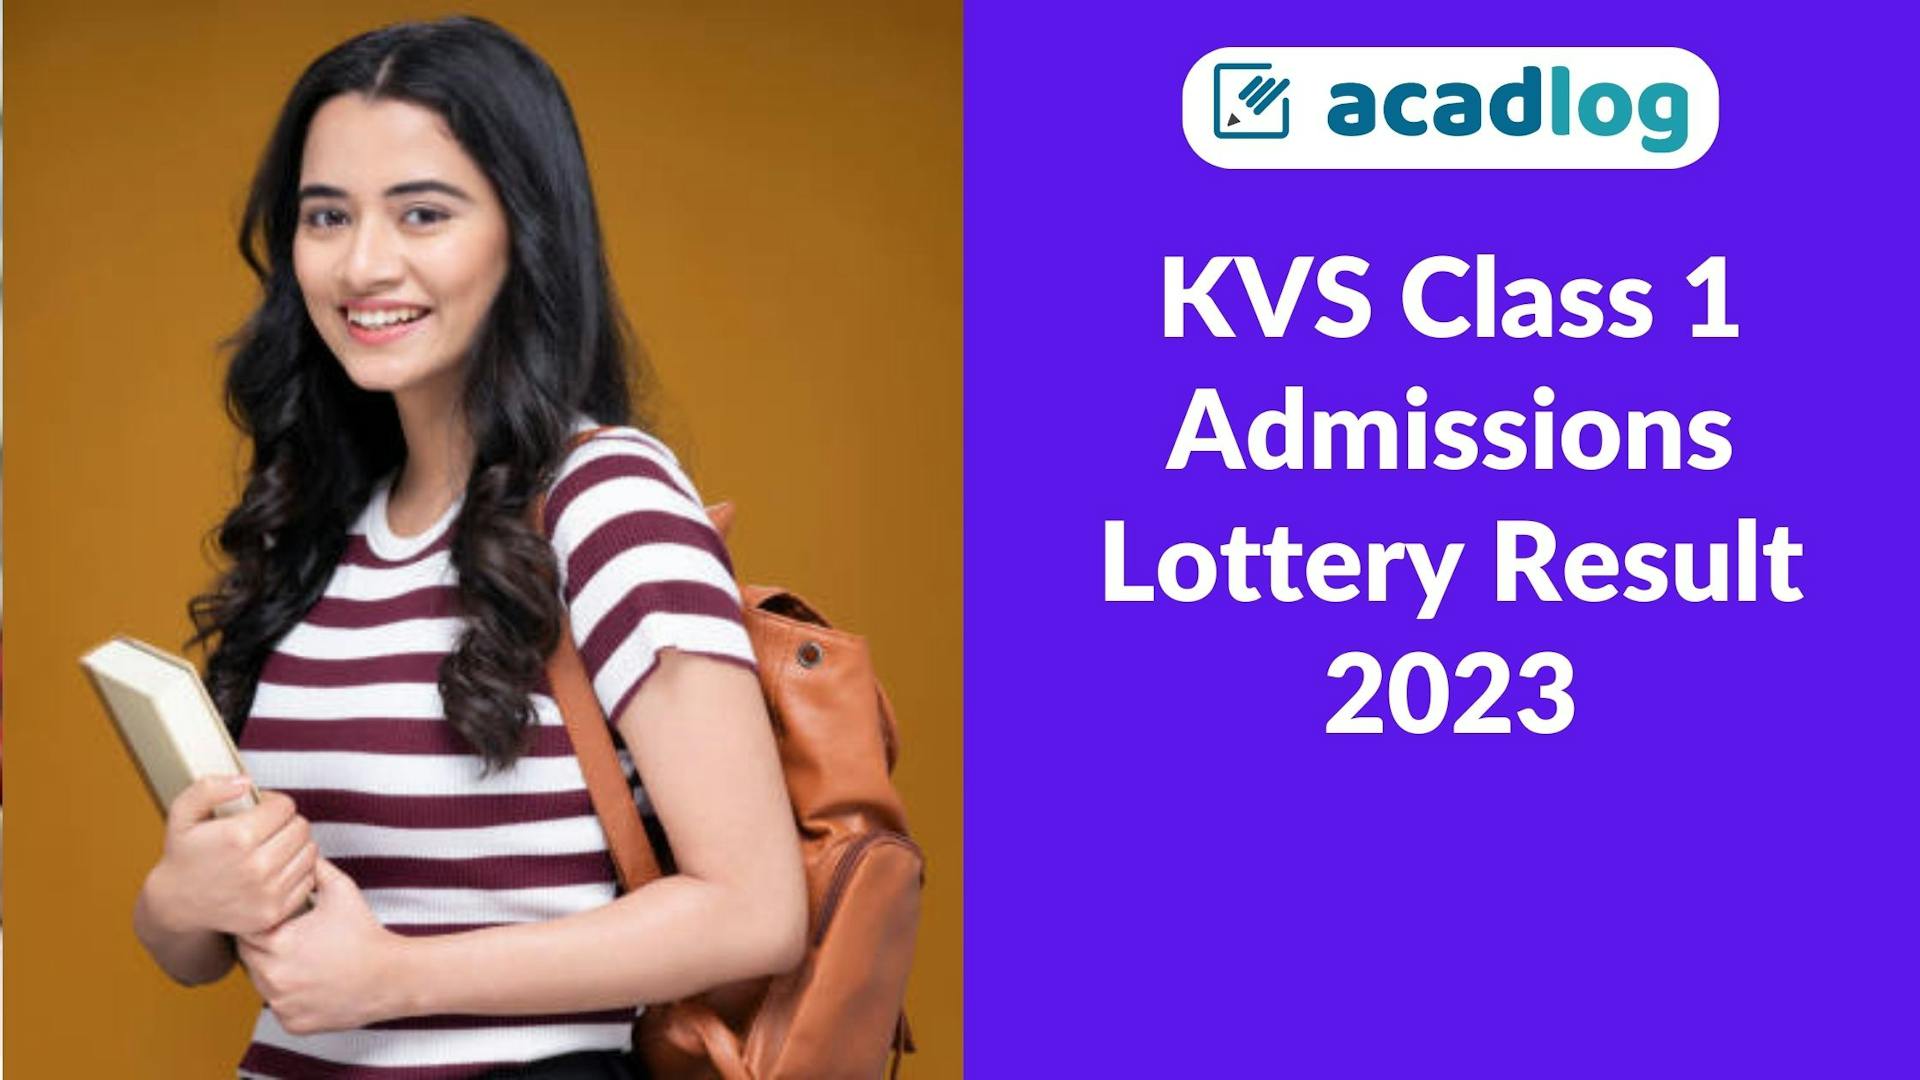 Acadlog: KVS Kendriya Vidyalaya Class 1 Admissions 2023 Lottery Result